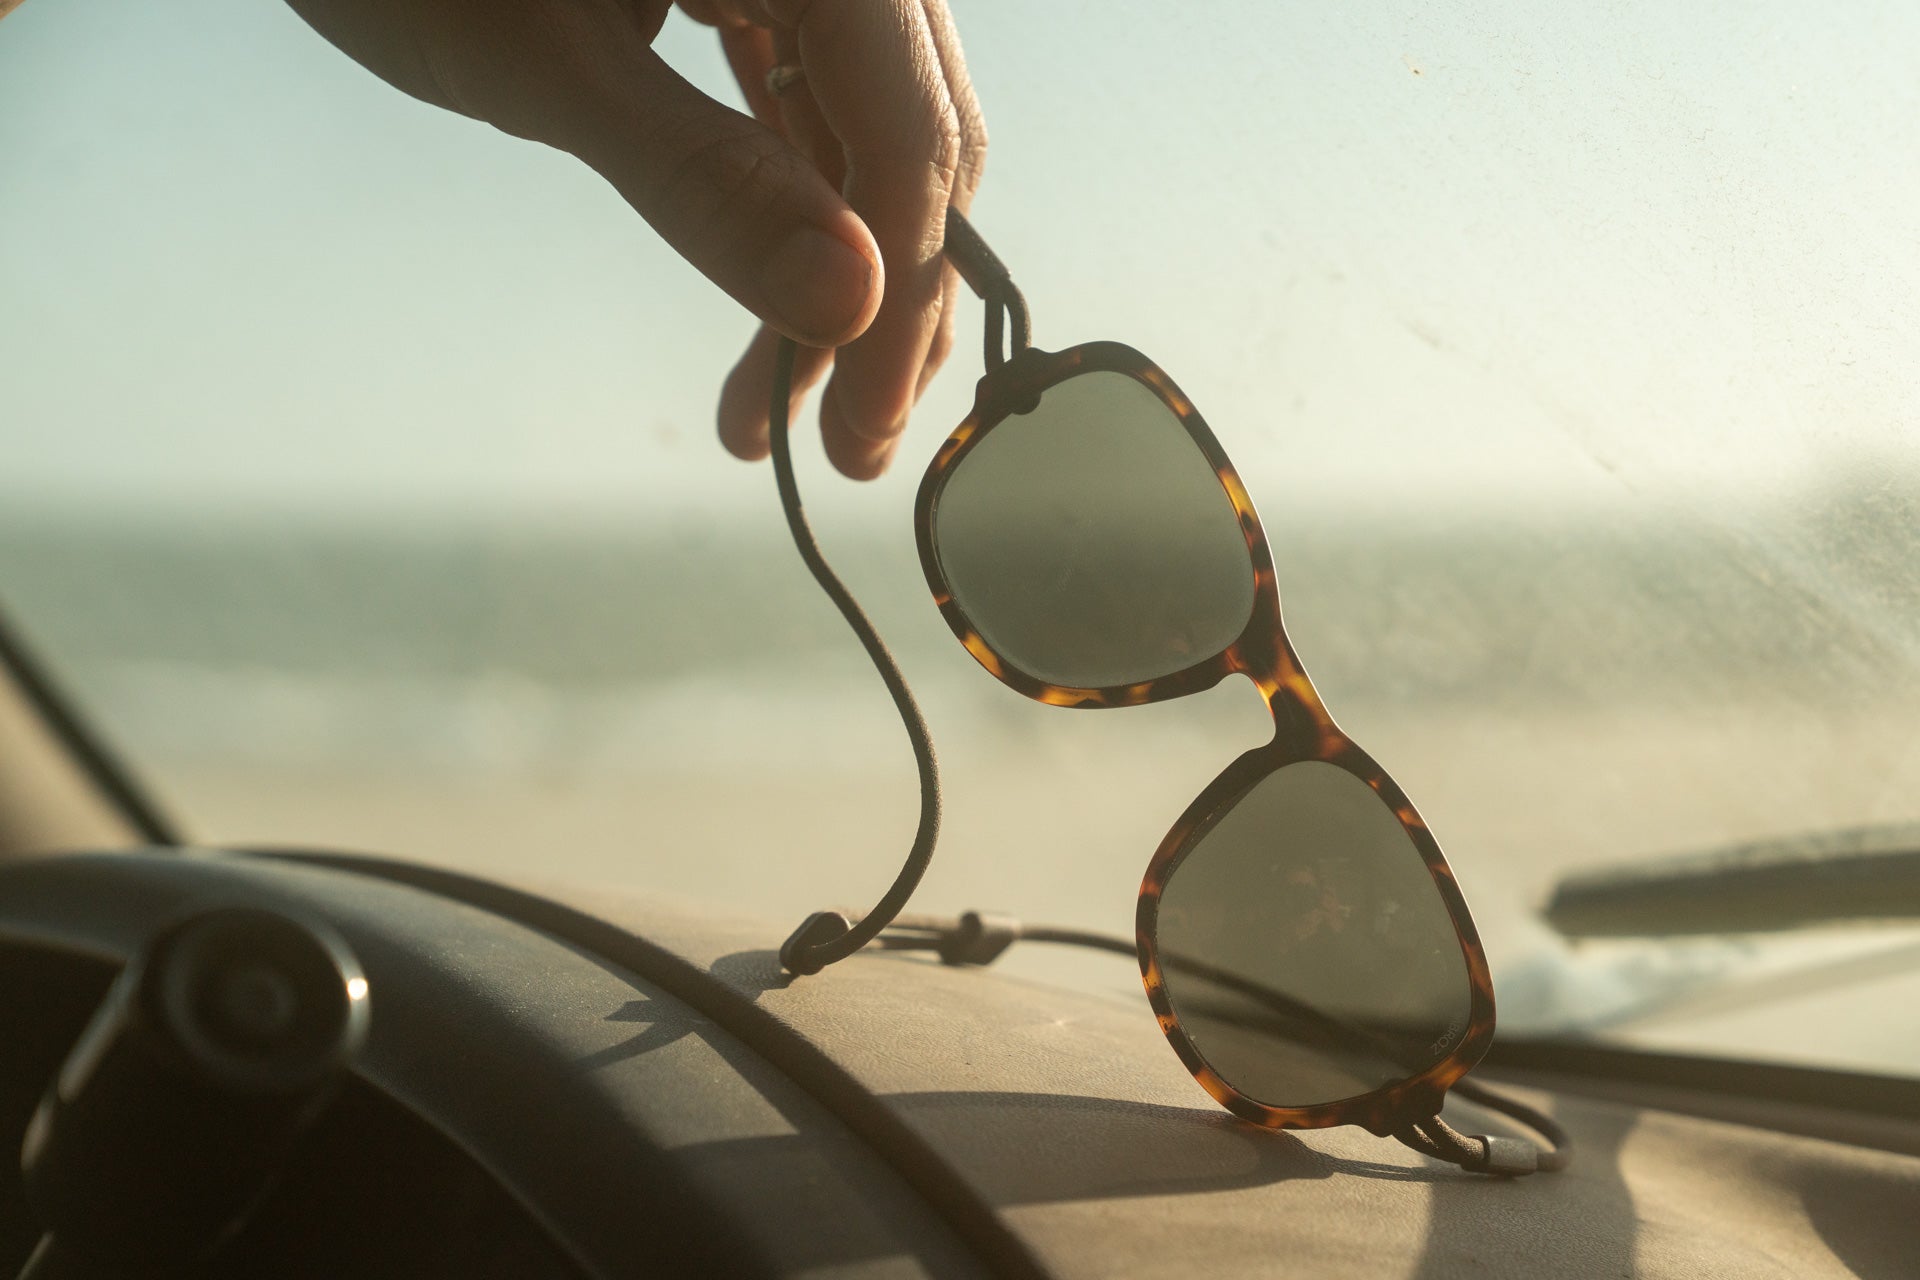 TETON_TORTOISE_GREY Ombraz teton armless string sunglasses in the car